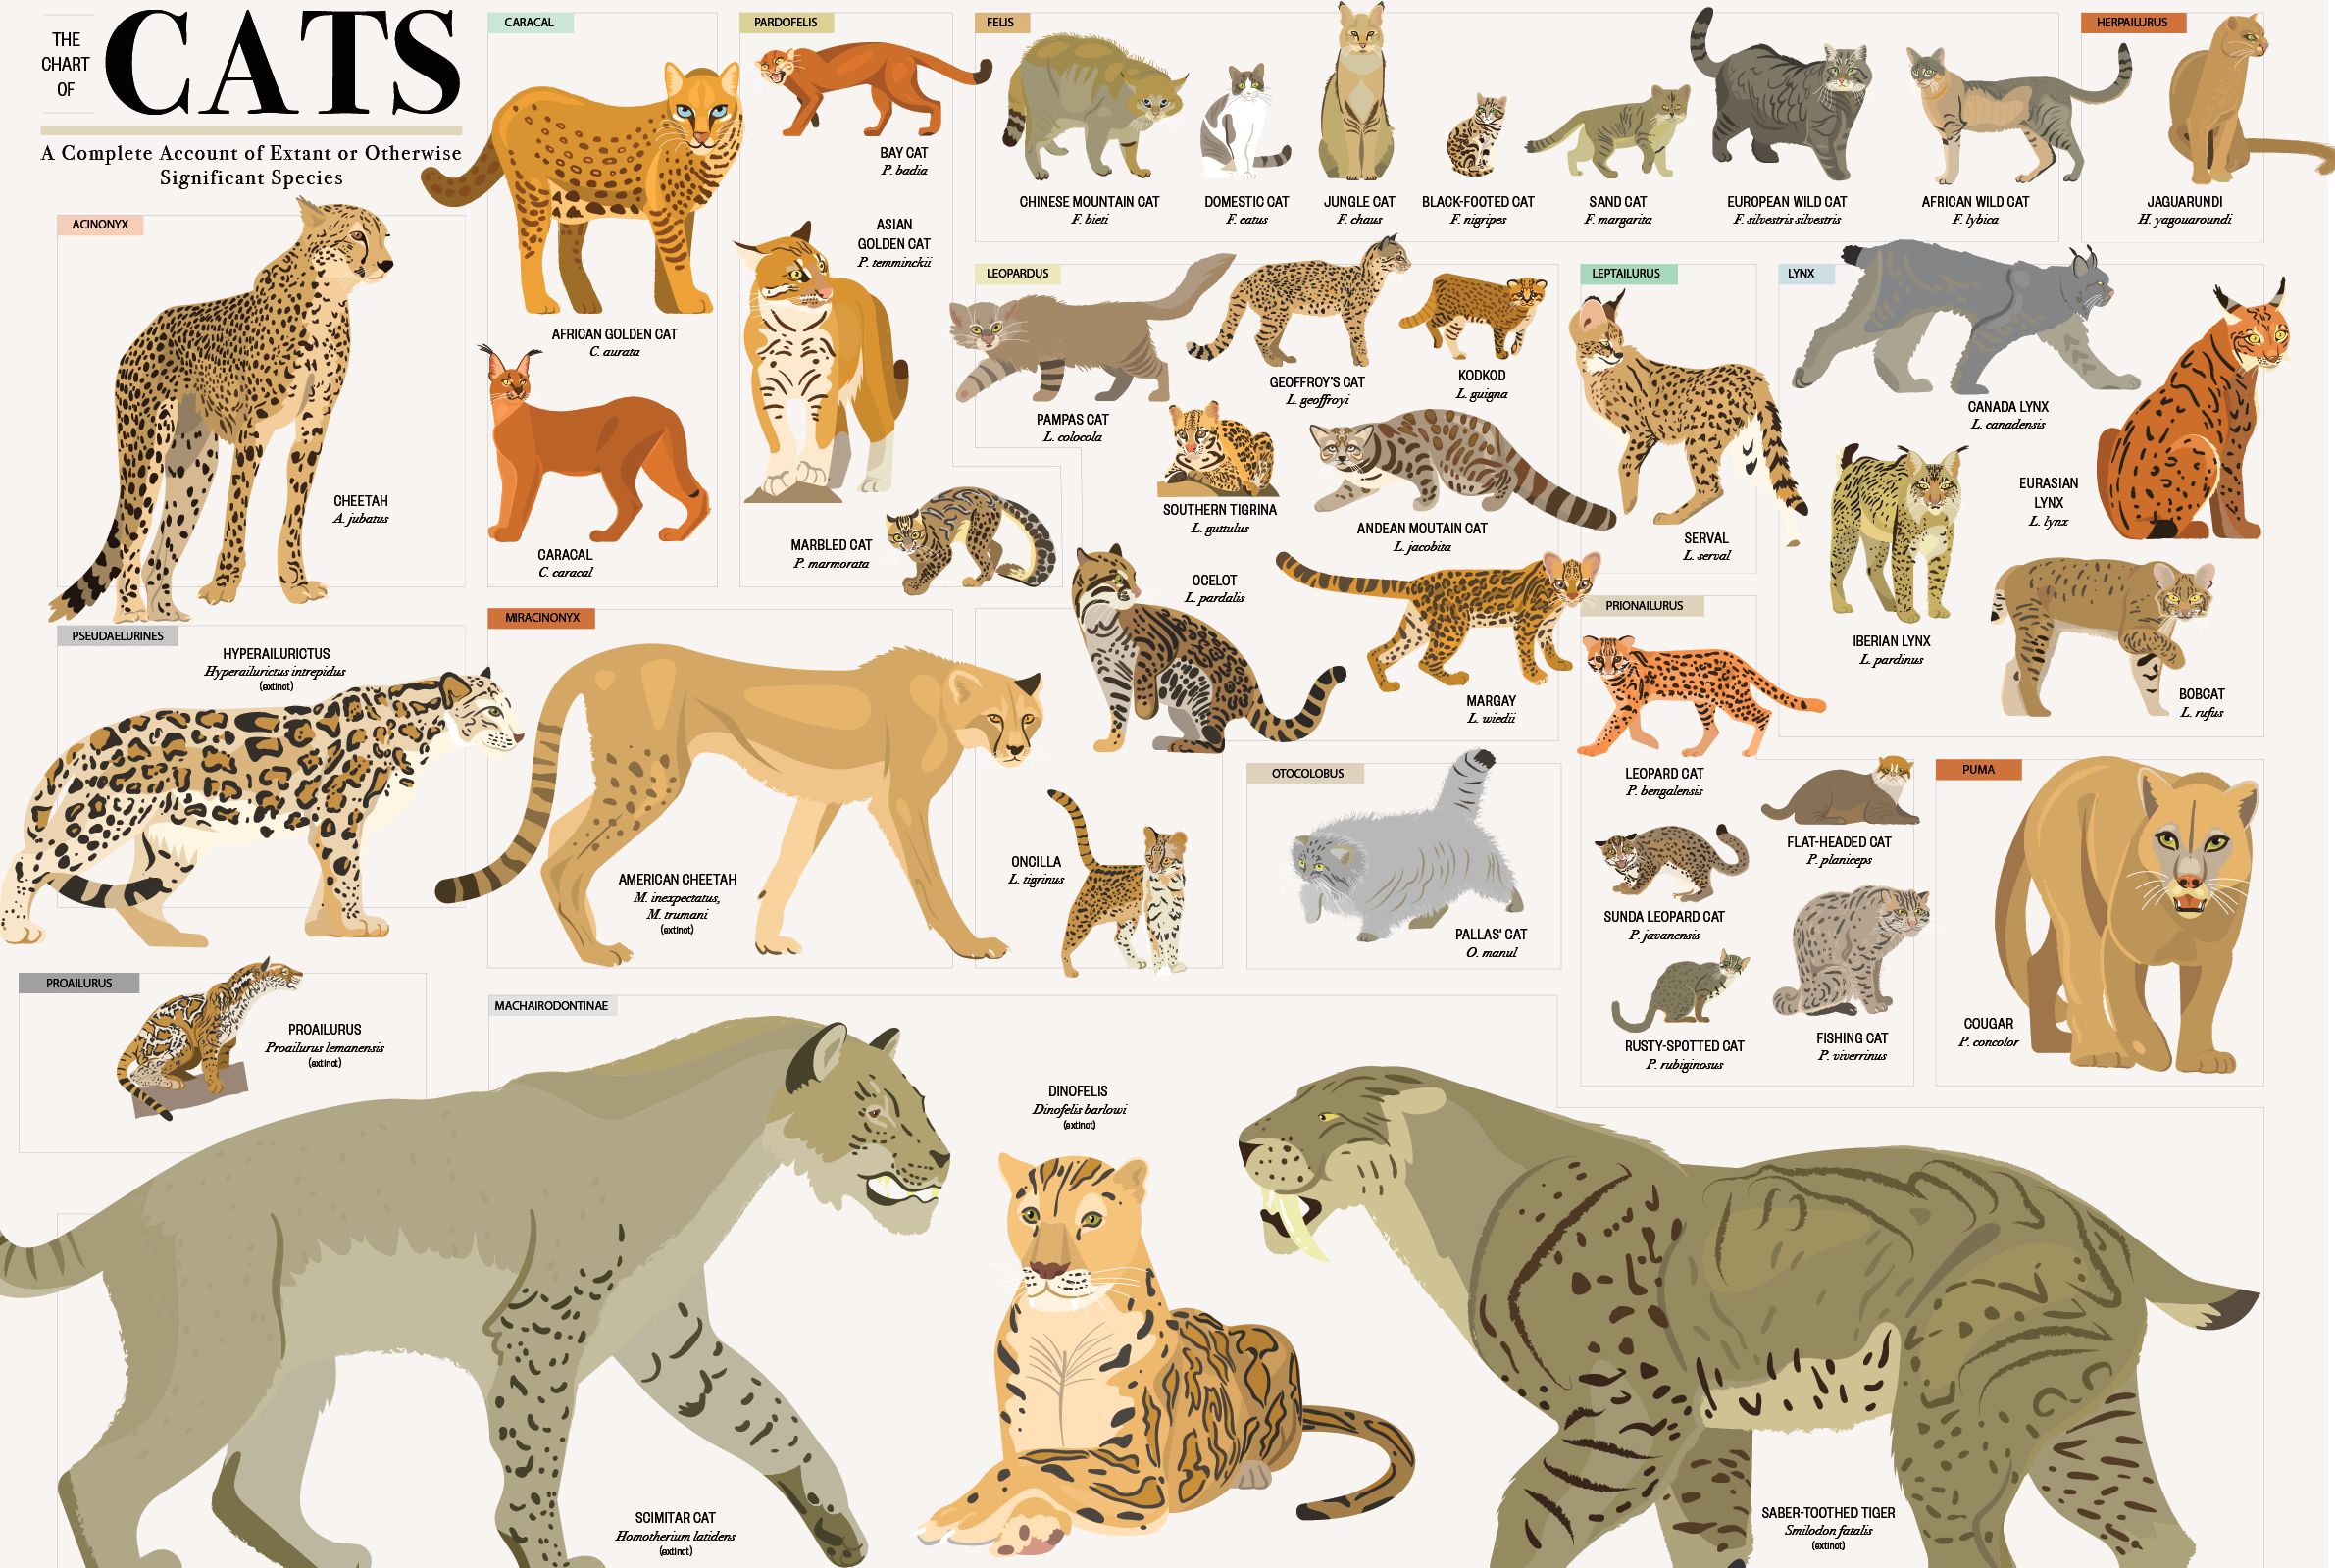 types of wild cats